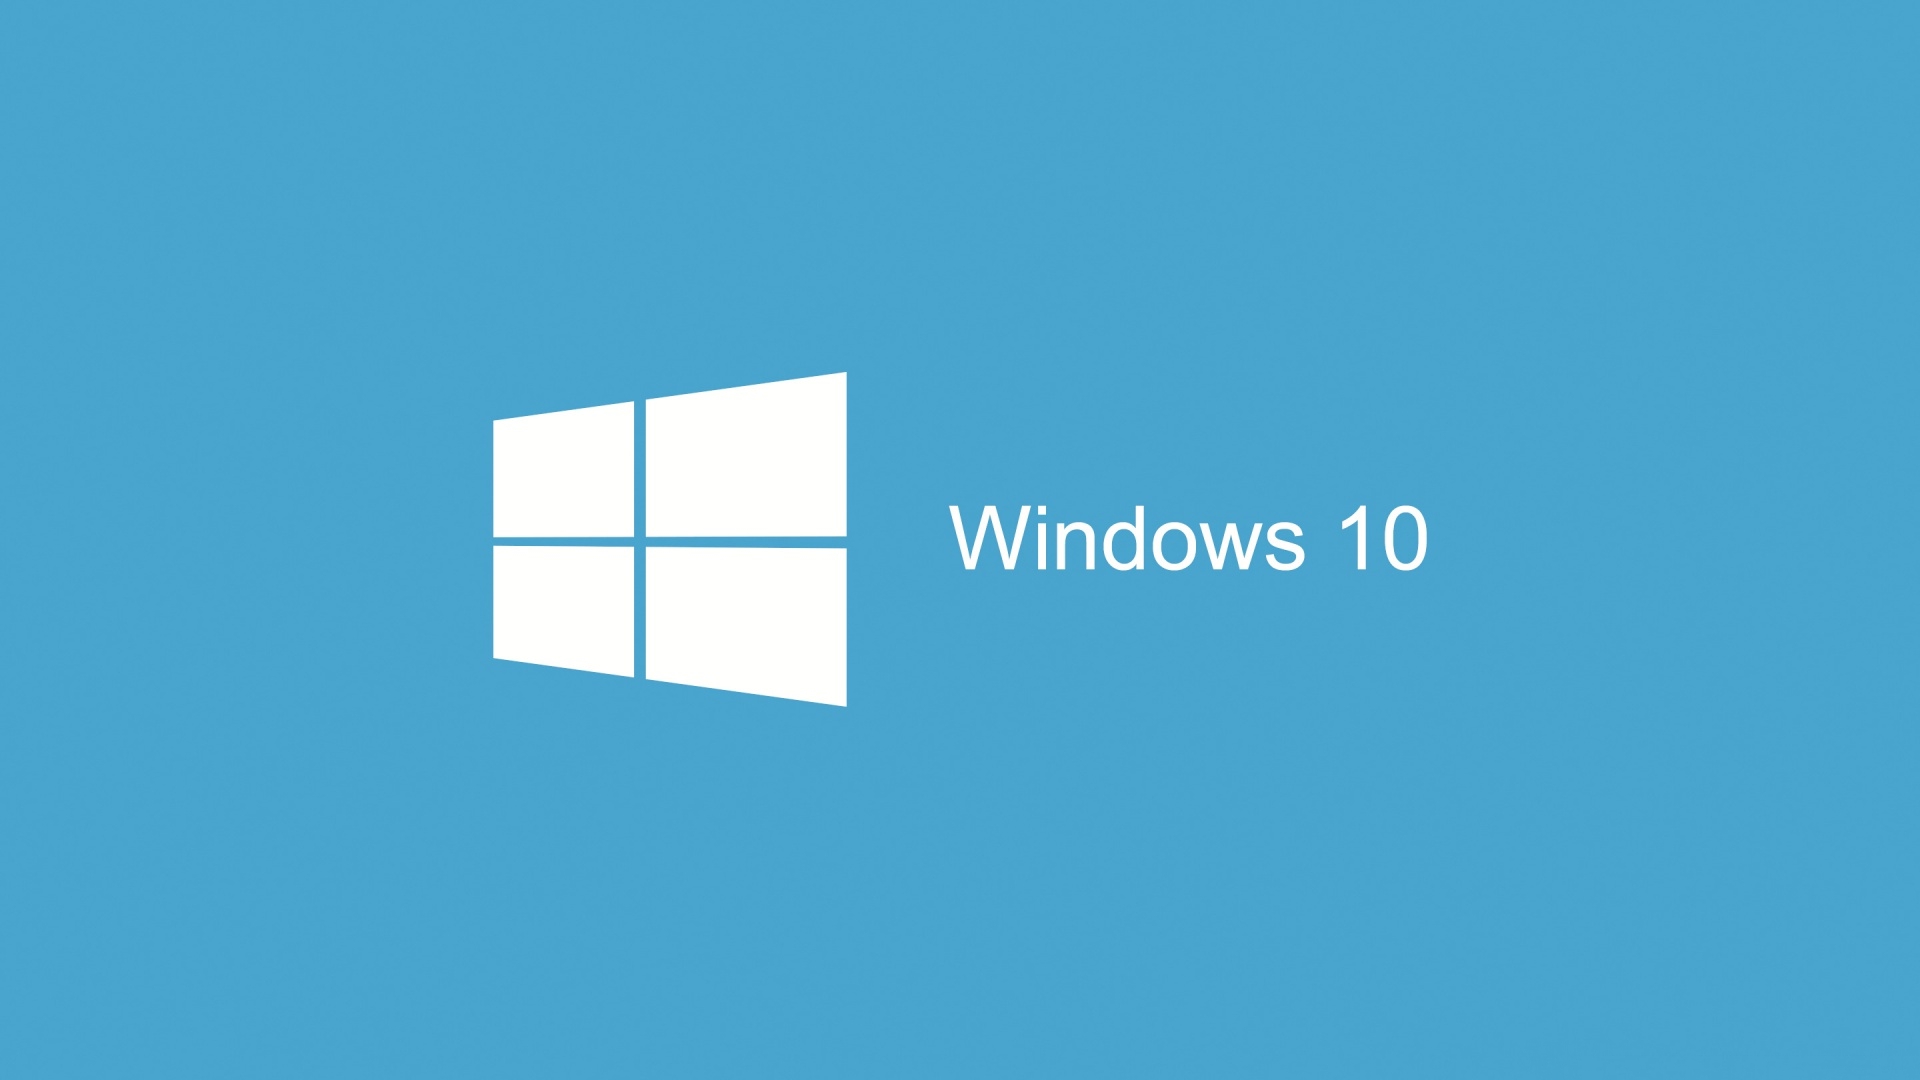 windows_10_2015_blue_background-wallpaper-1920x1080.jpg